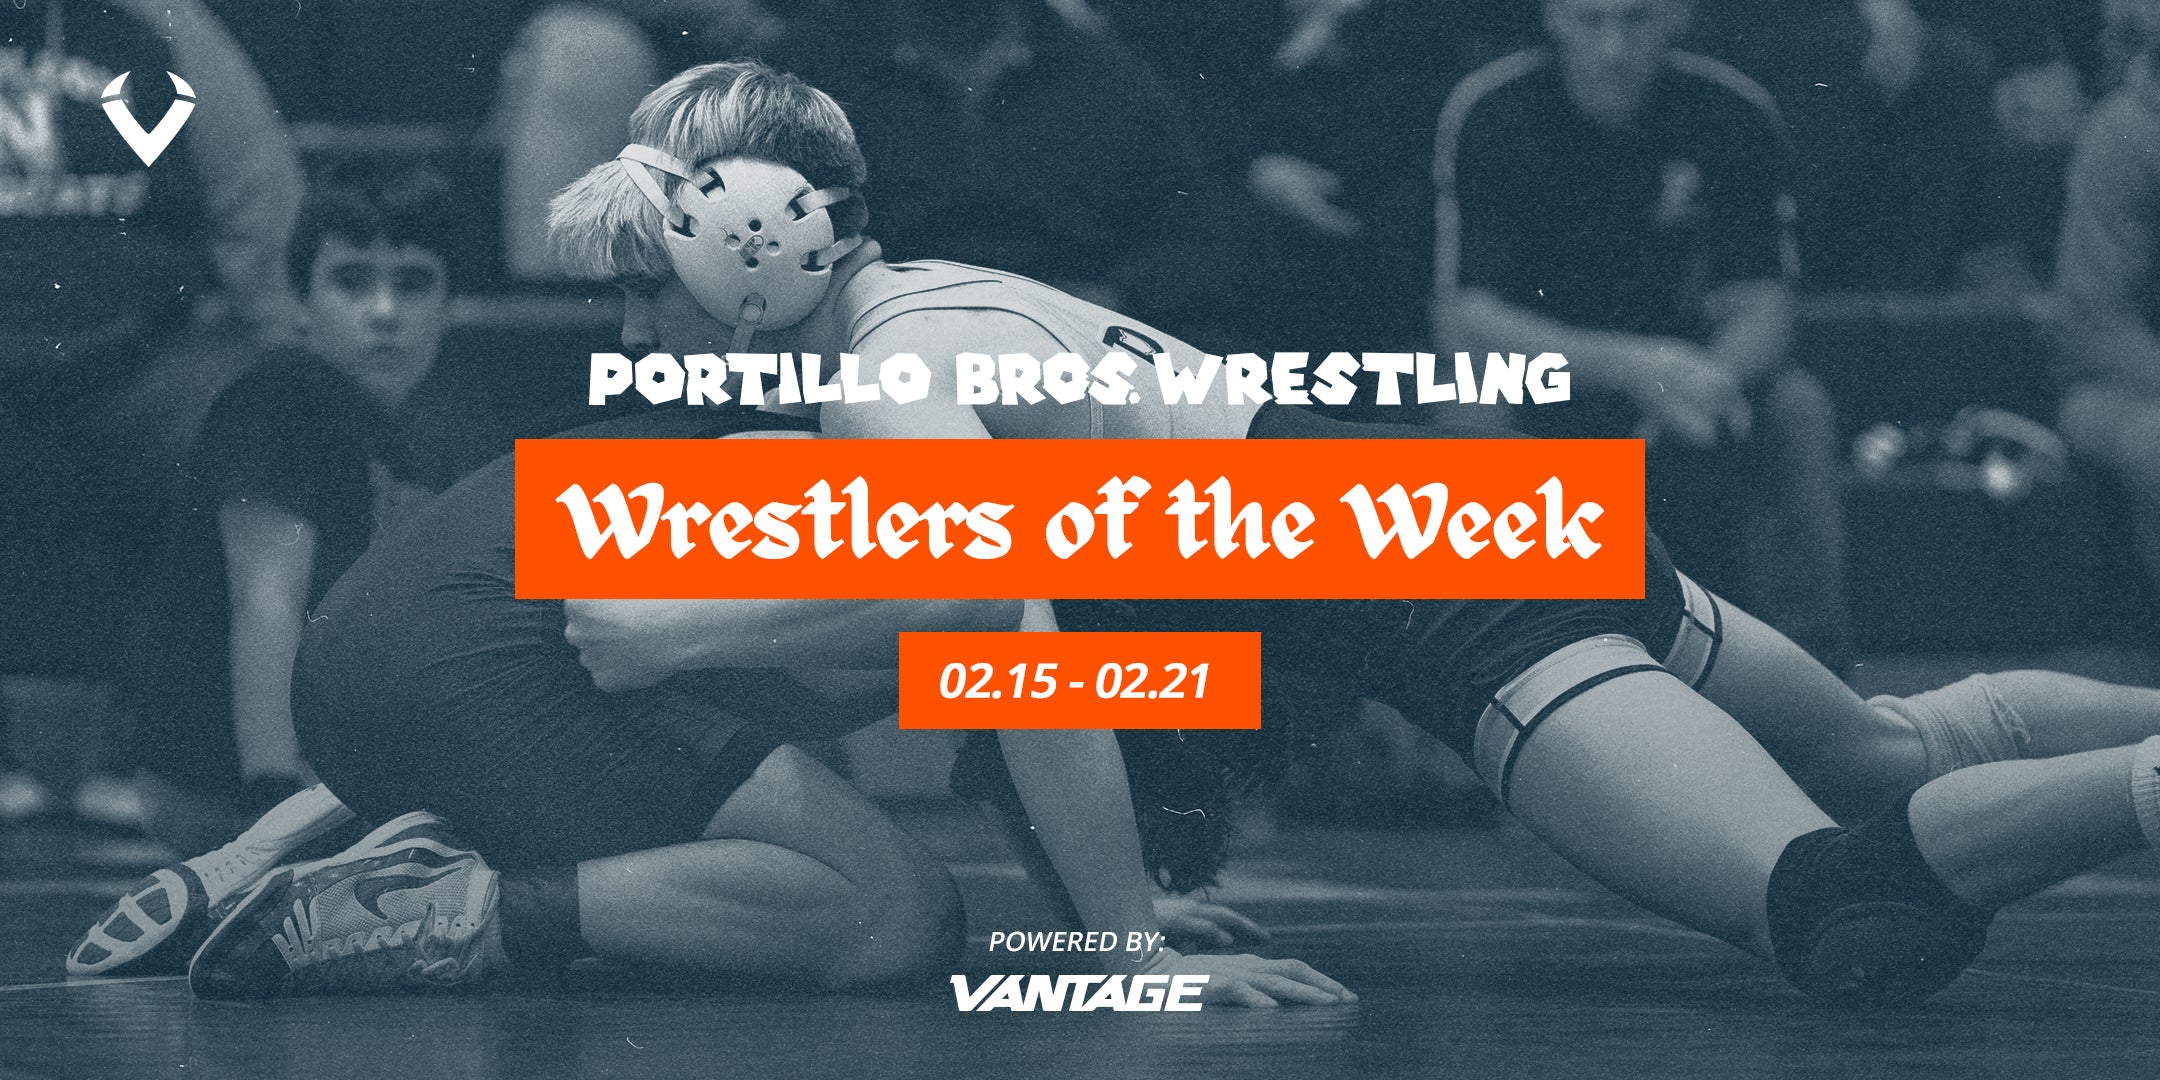 Portillo Bros Wrestling - Wrestlers of the Week (02.15.24 - 02.21.24)